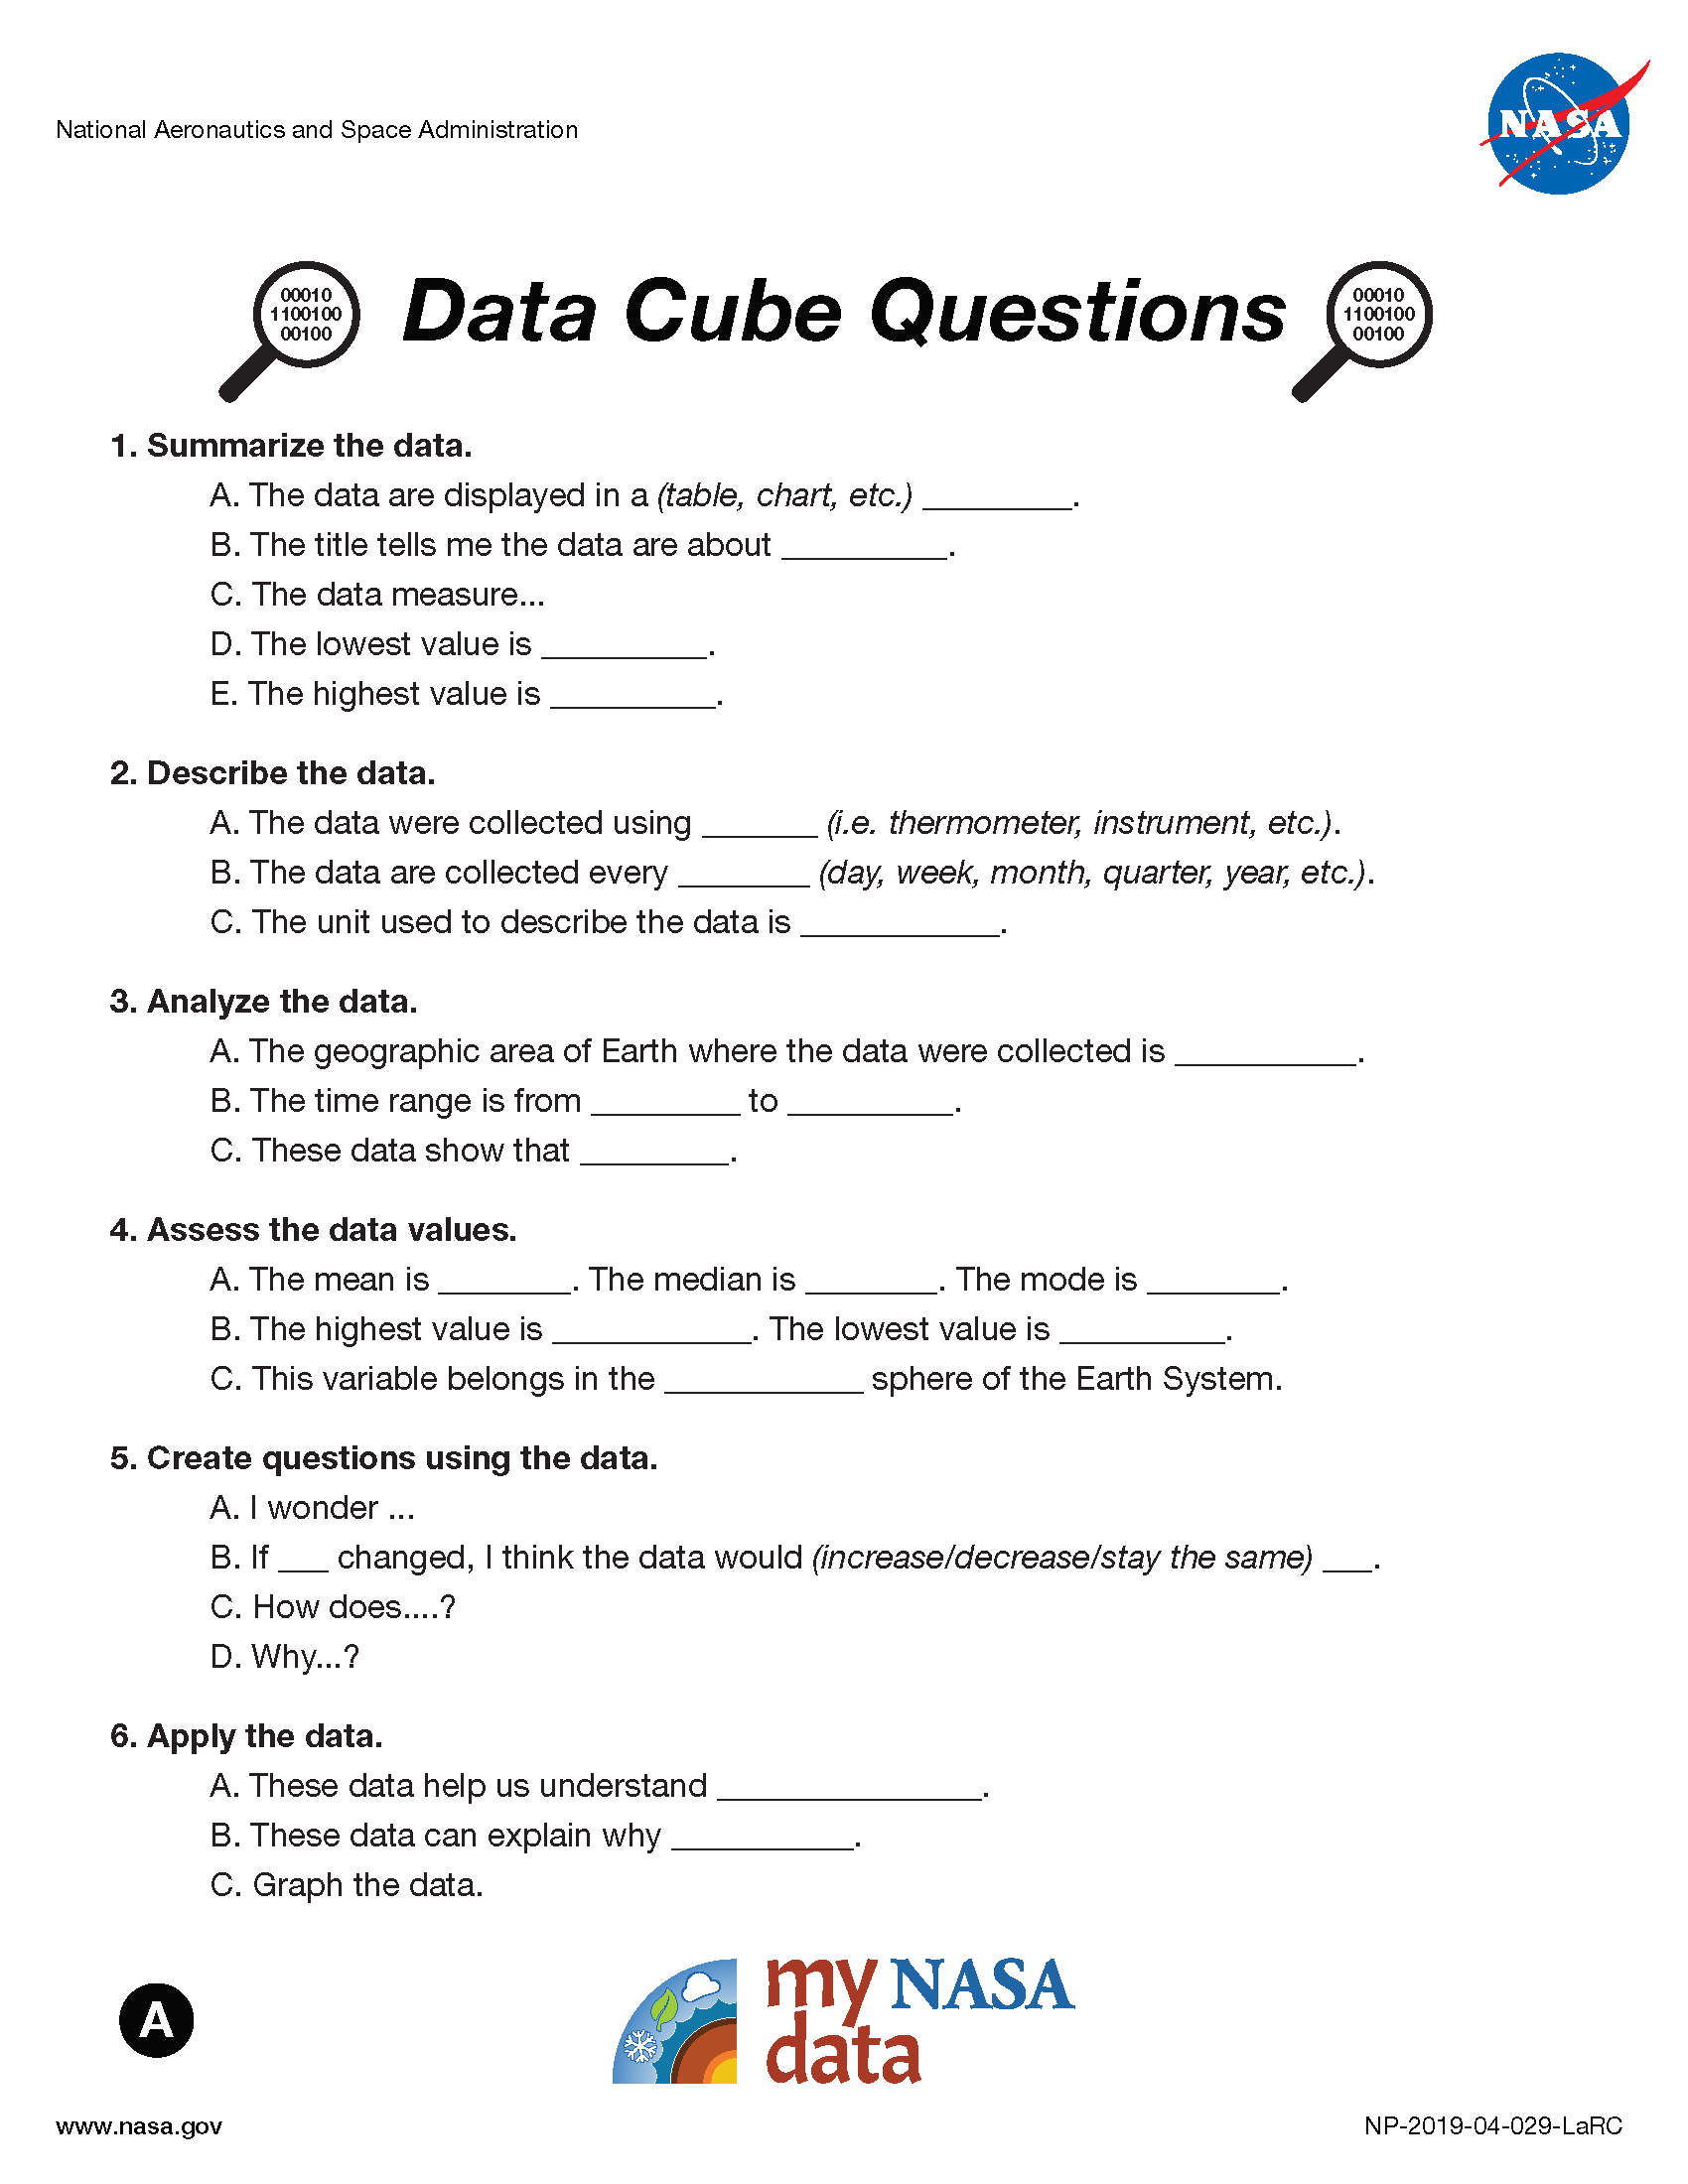 My NASA Data - Data Literacy - Data Cube Beginner Questions